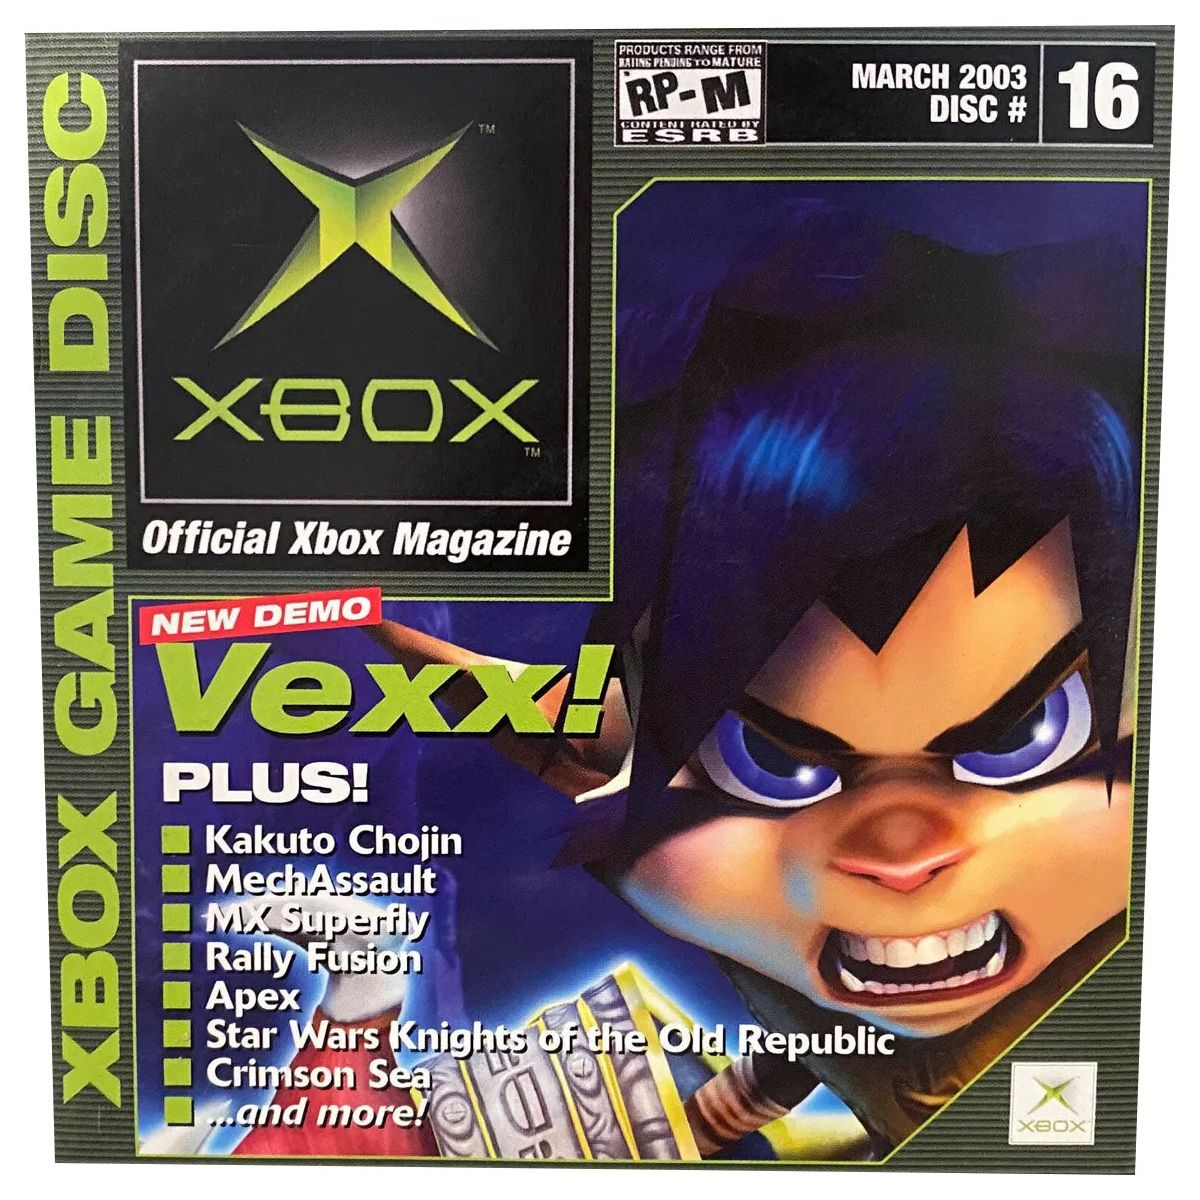 XBOX - Official Xbox Magazine Demo Disc 16